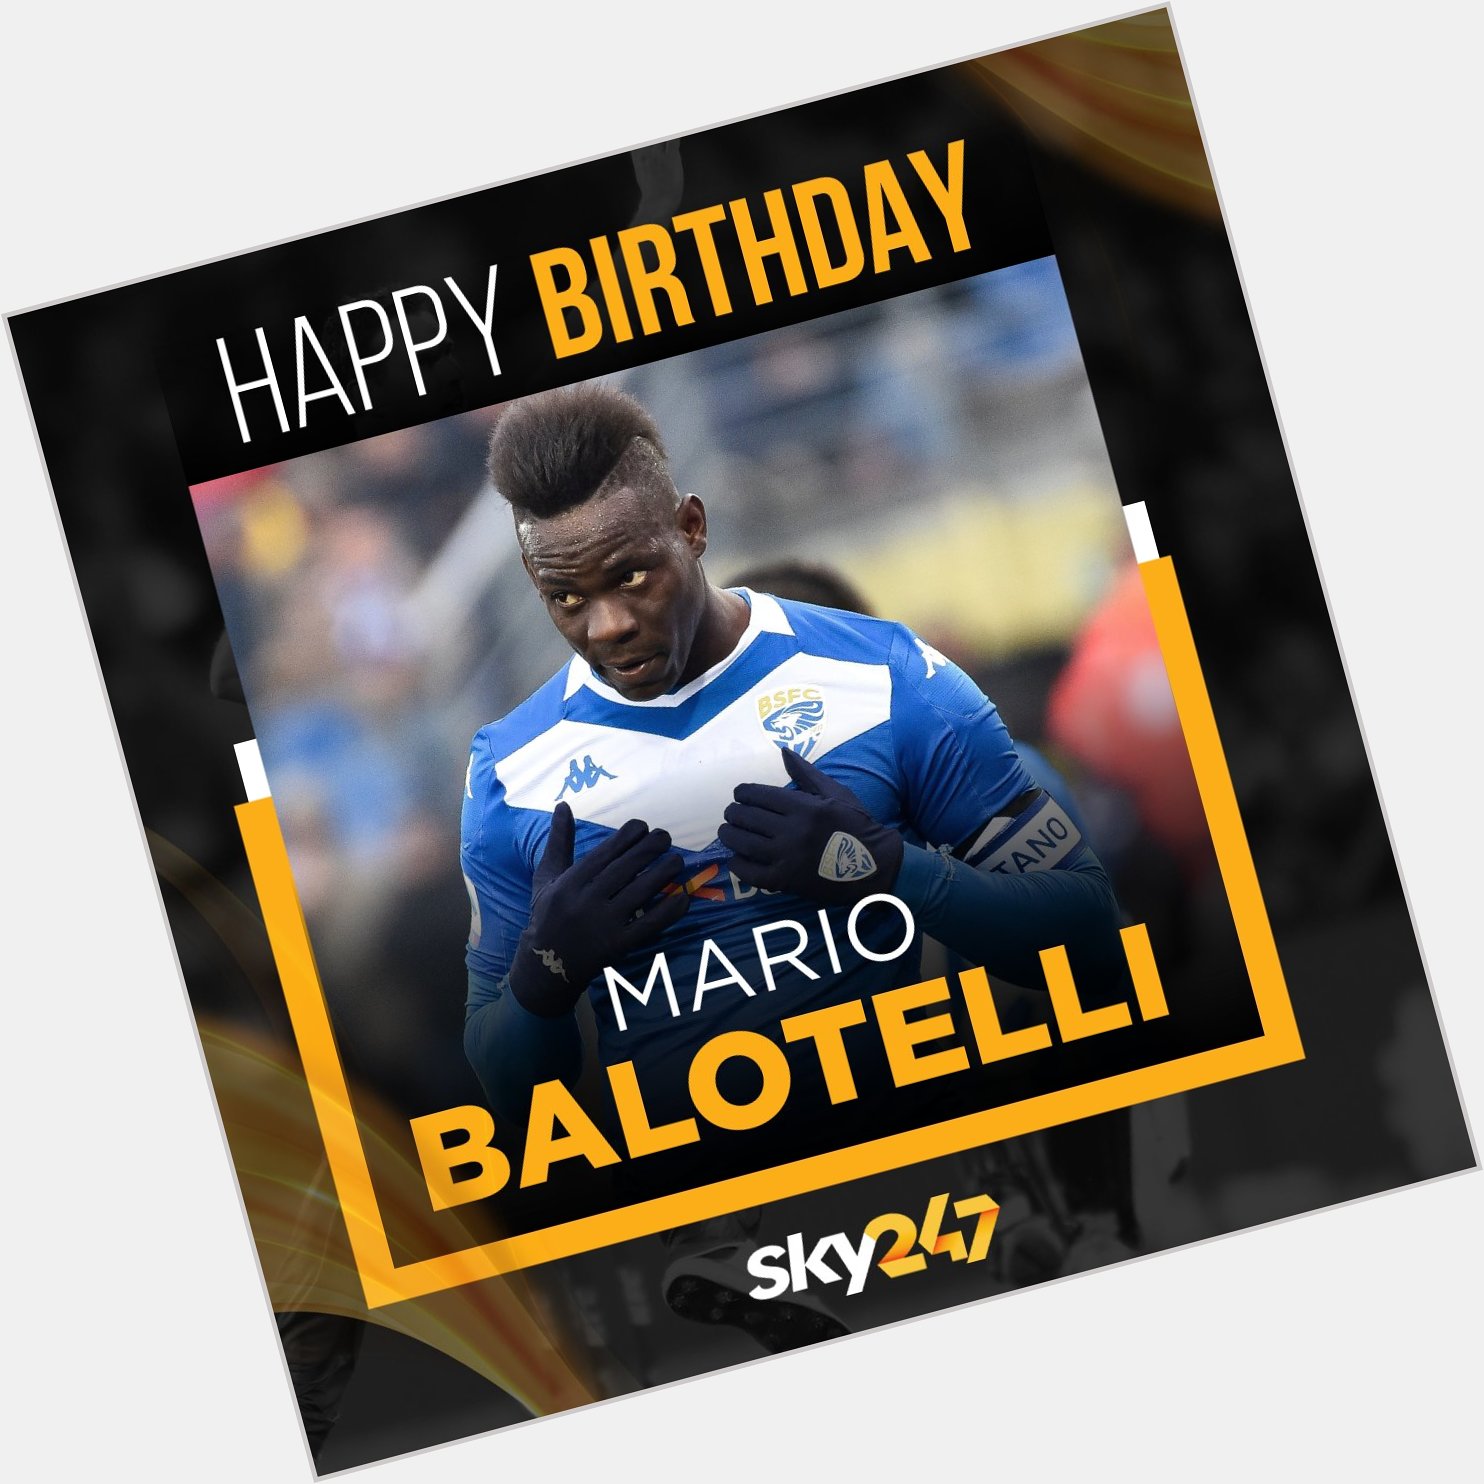 Wishing Mario Balotelli a very happy birthday.    